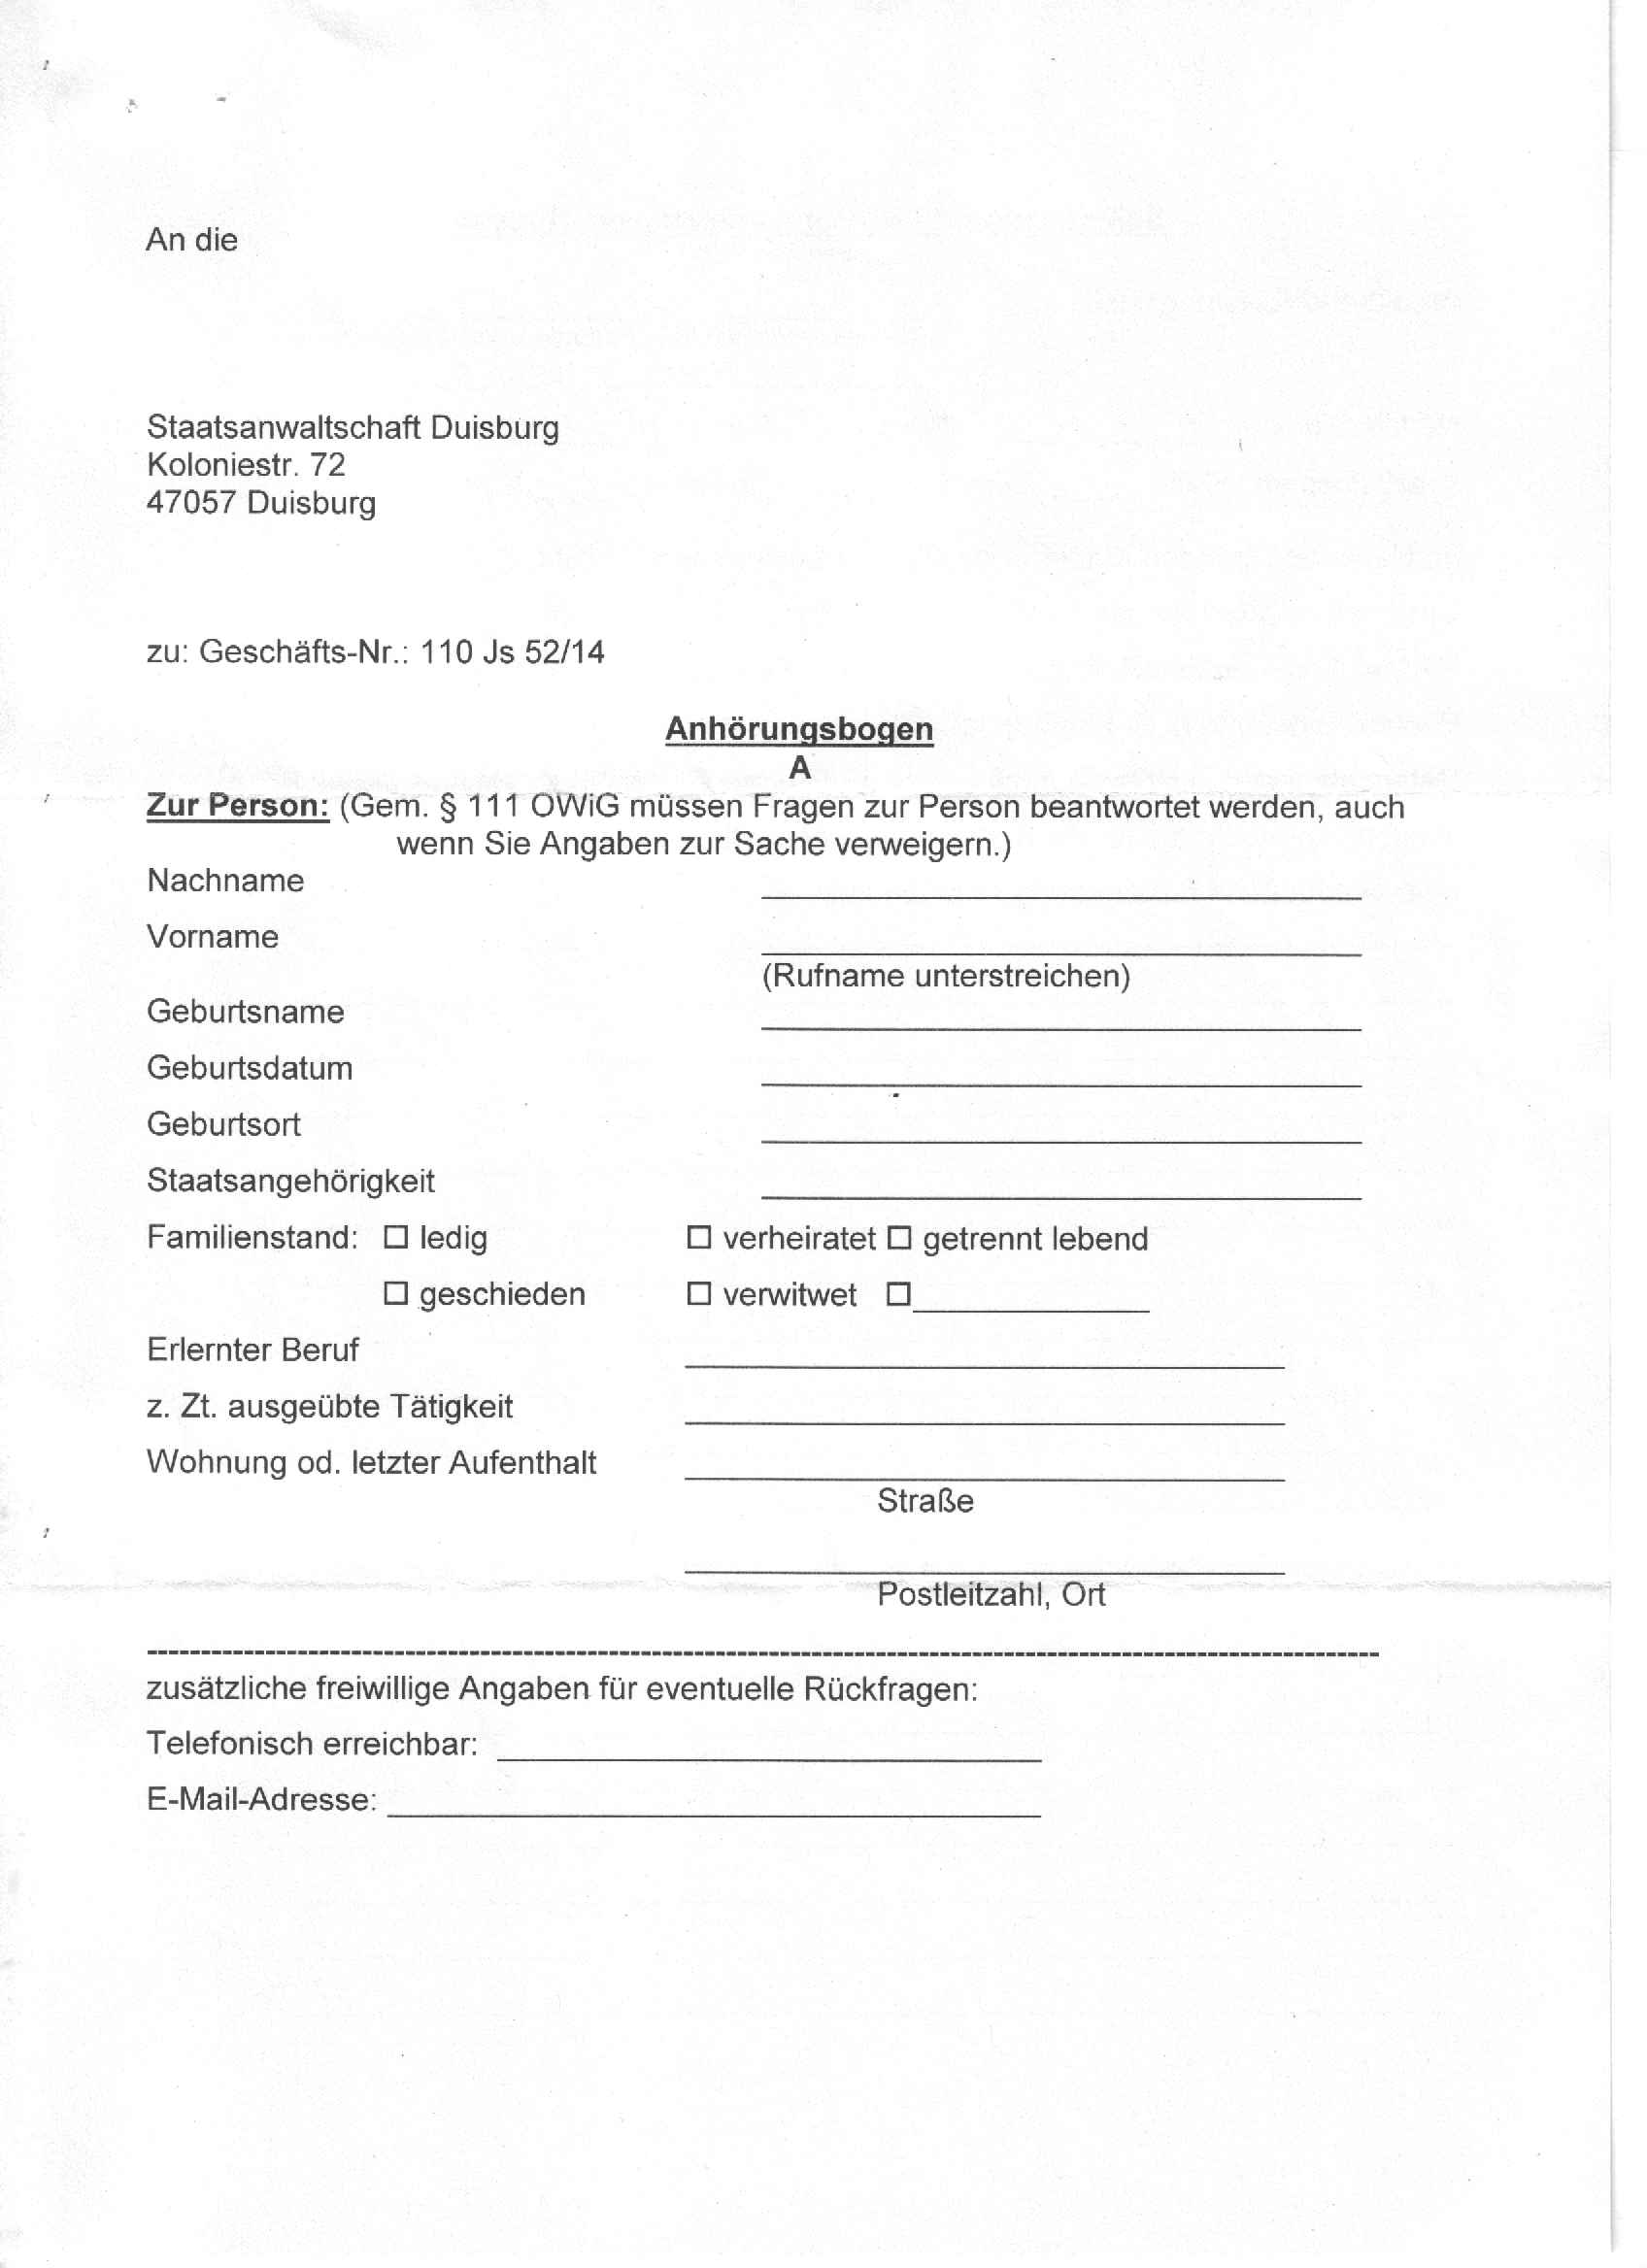 Bescheid der Staatsanwaltschaft Duisburg, Oberstaatsanwalt Wolfgang Seither, vom 05.11.2014, S. 3